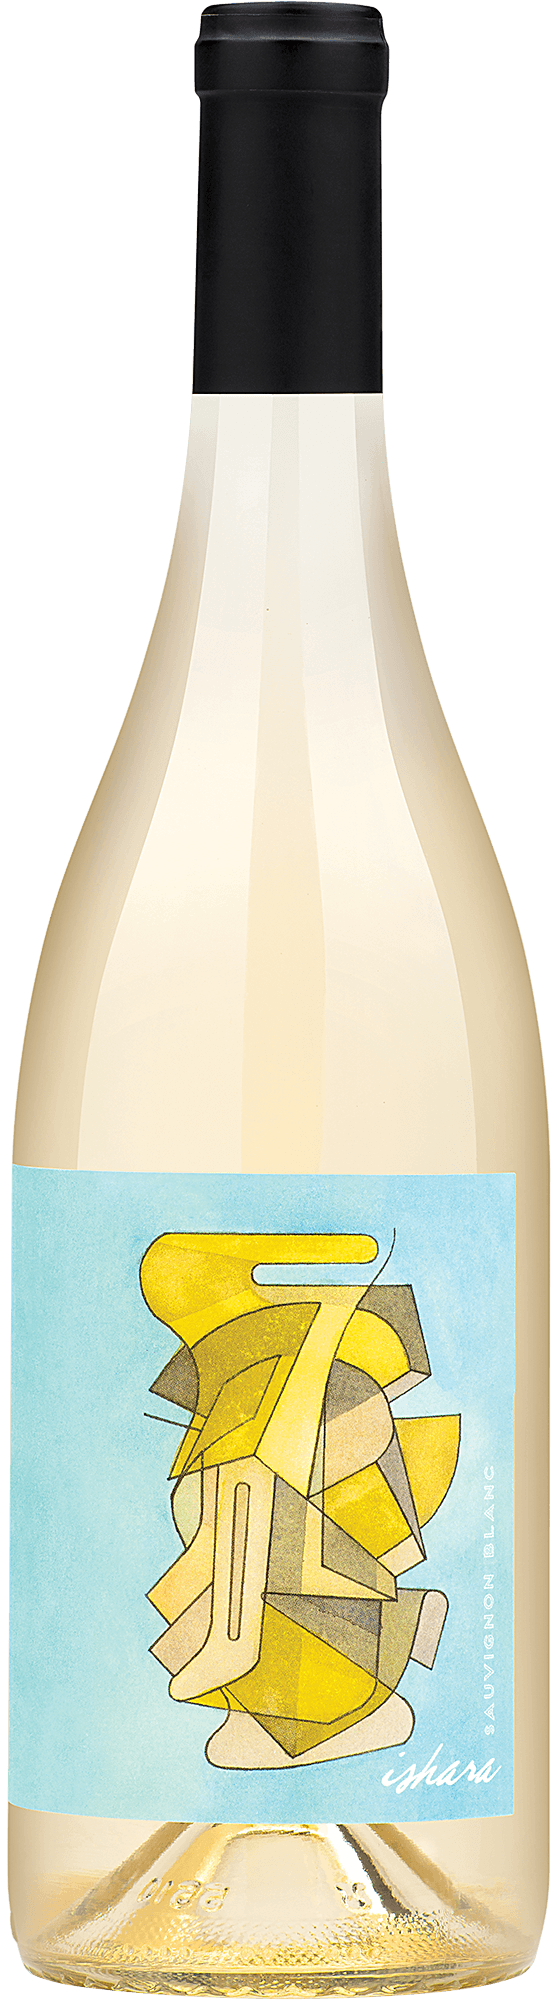 2019 Ishara Sauvignon Blanc